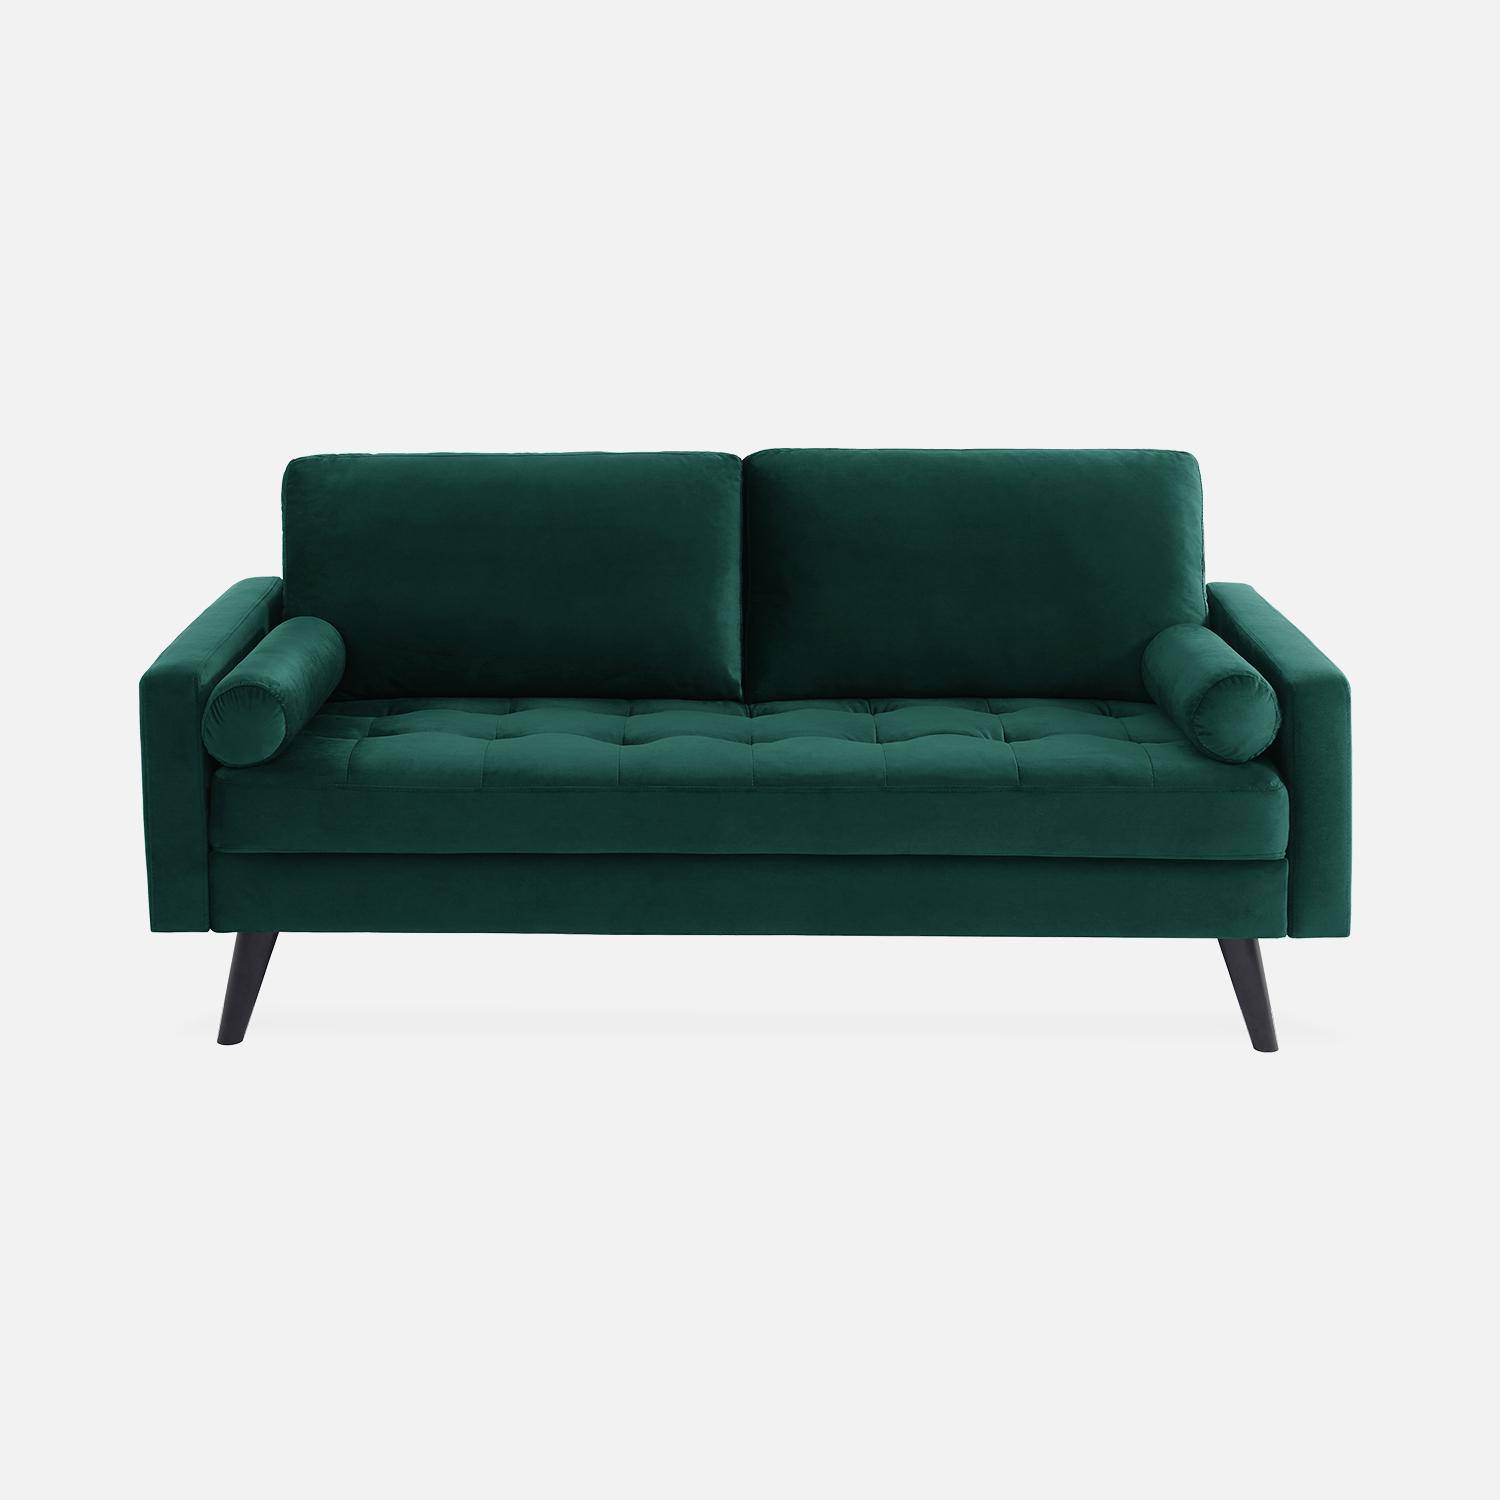 Velvet vintage style 3-seater sofa with Scandi style wooden legs - Ivar - Green,sweeek,Photo3